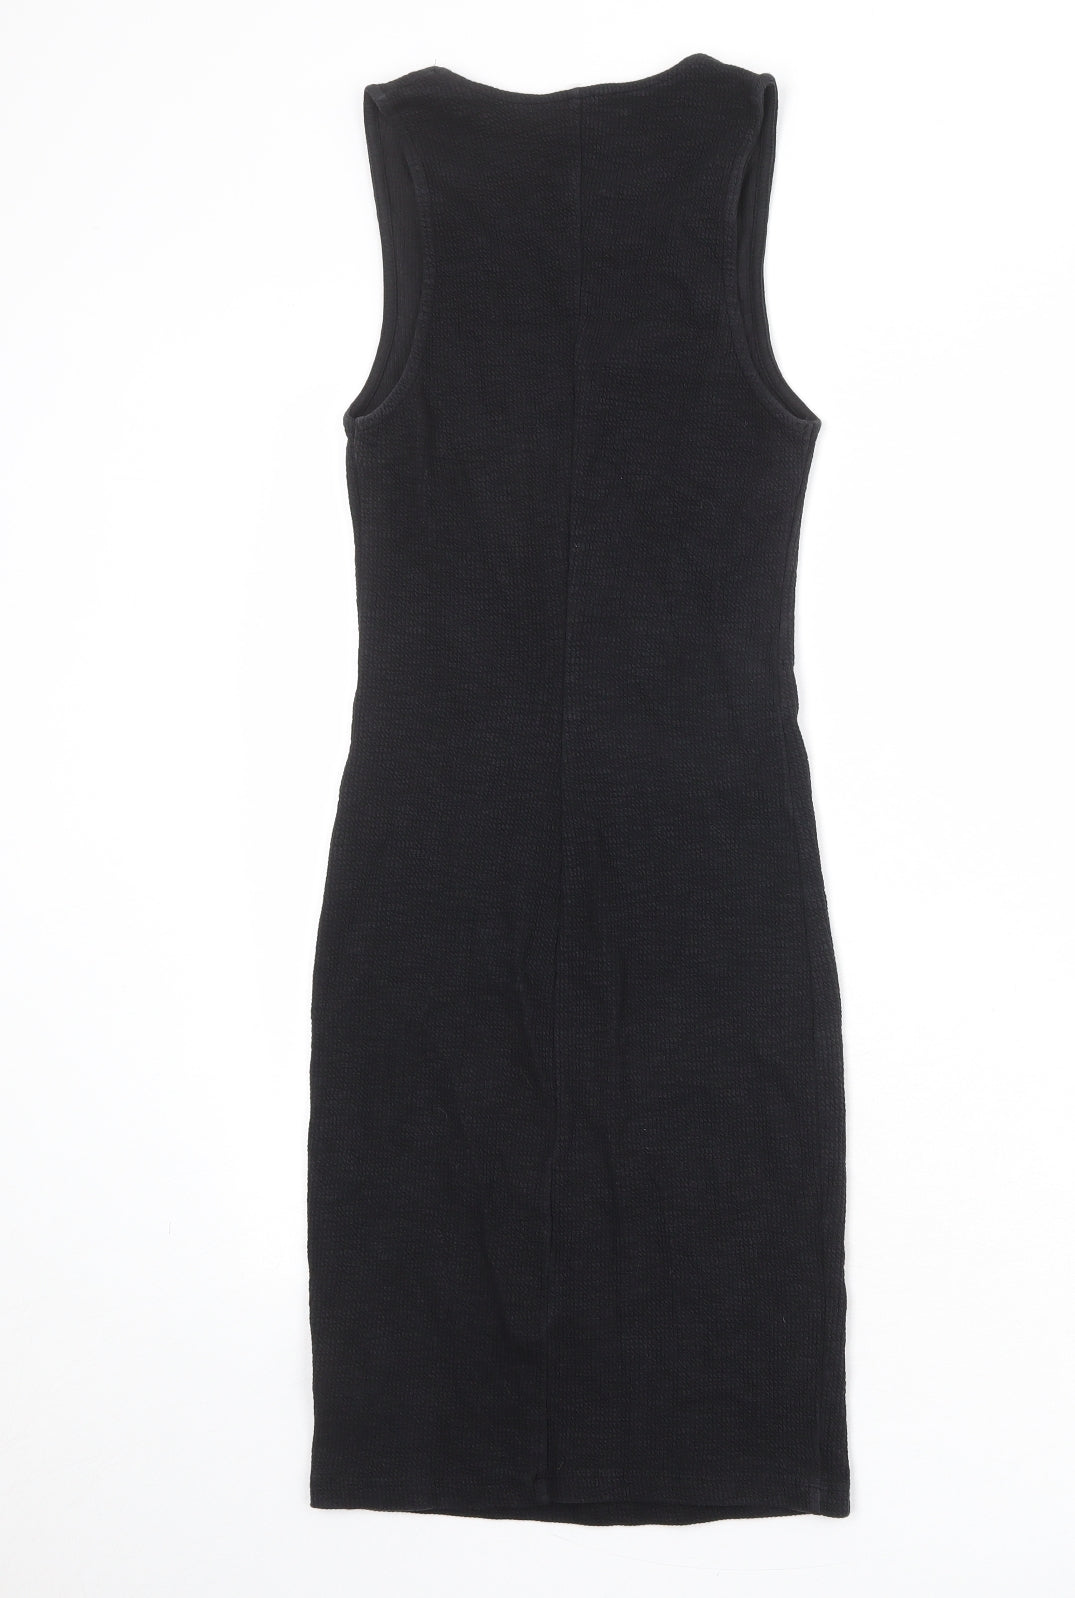 Zara Womens Black Polyester Bodycon Size S V-Neck Pullover